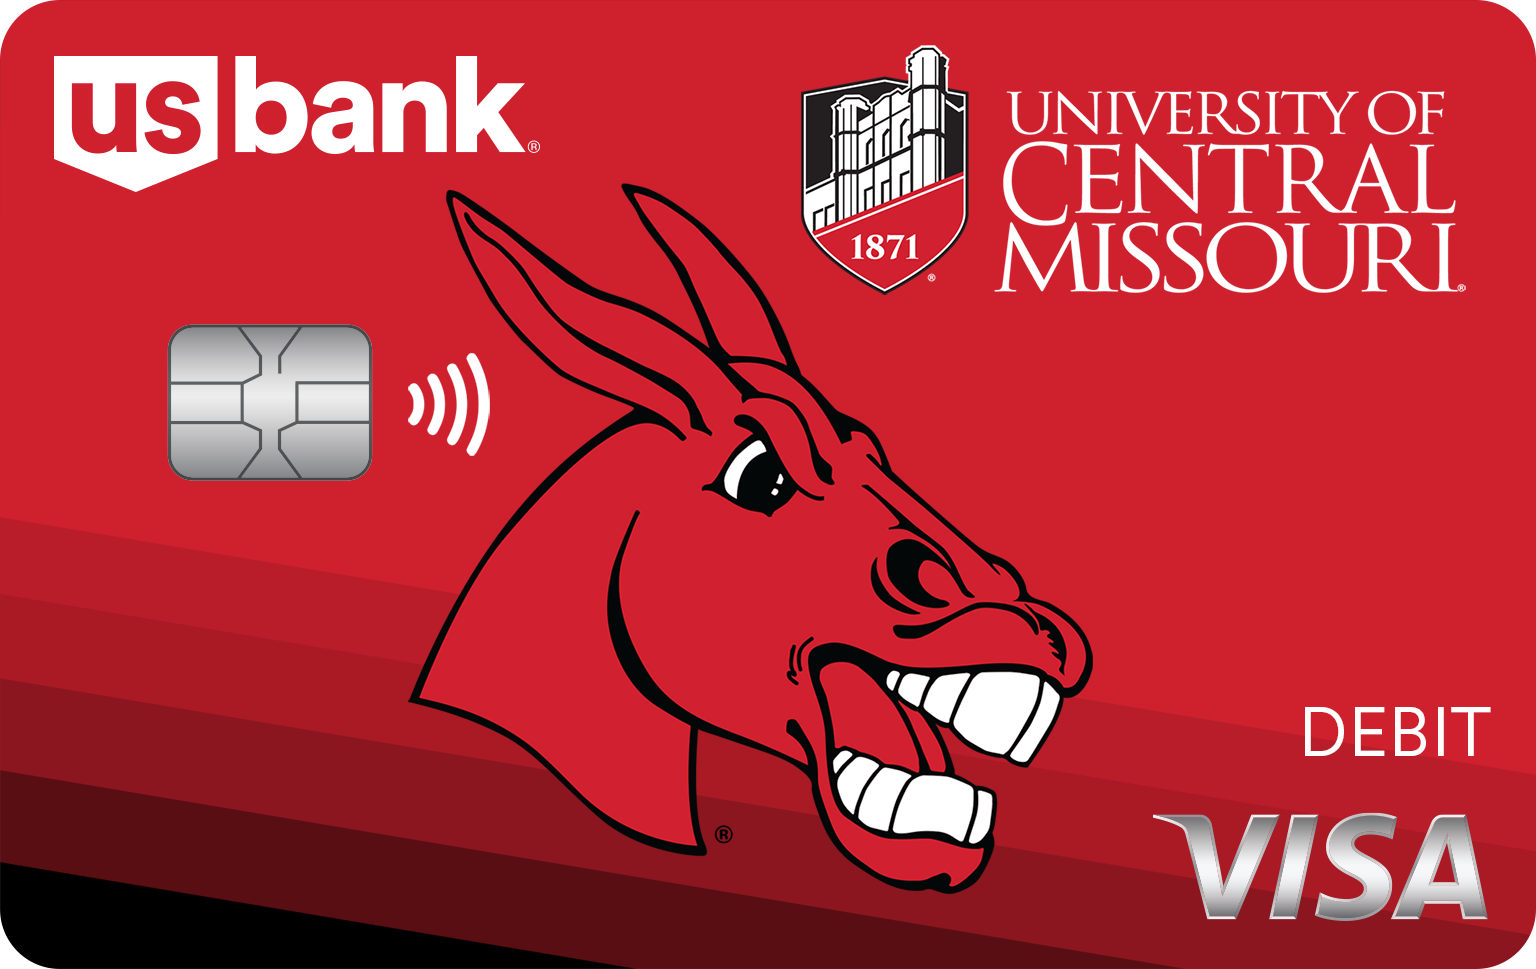 Tarjeta 8 Diseño de tarjeta de débito Visa de la universidad University of Central Missouri.